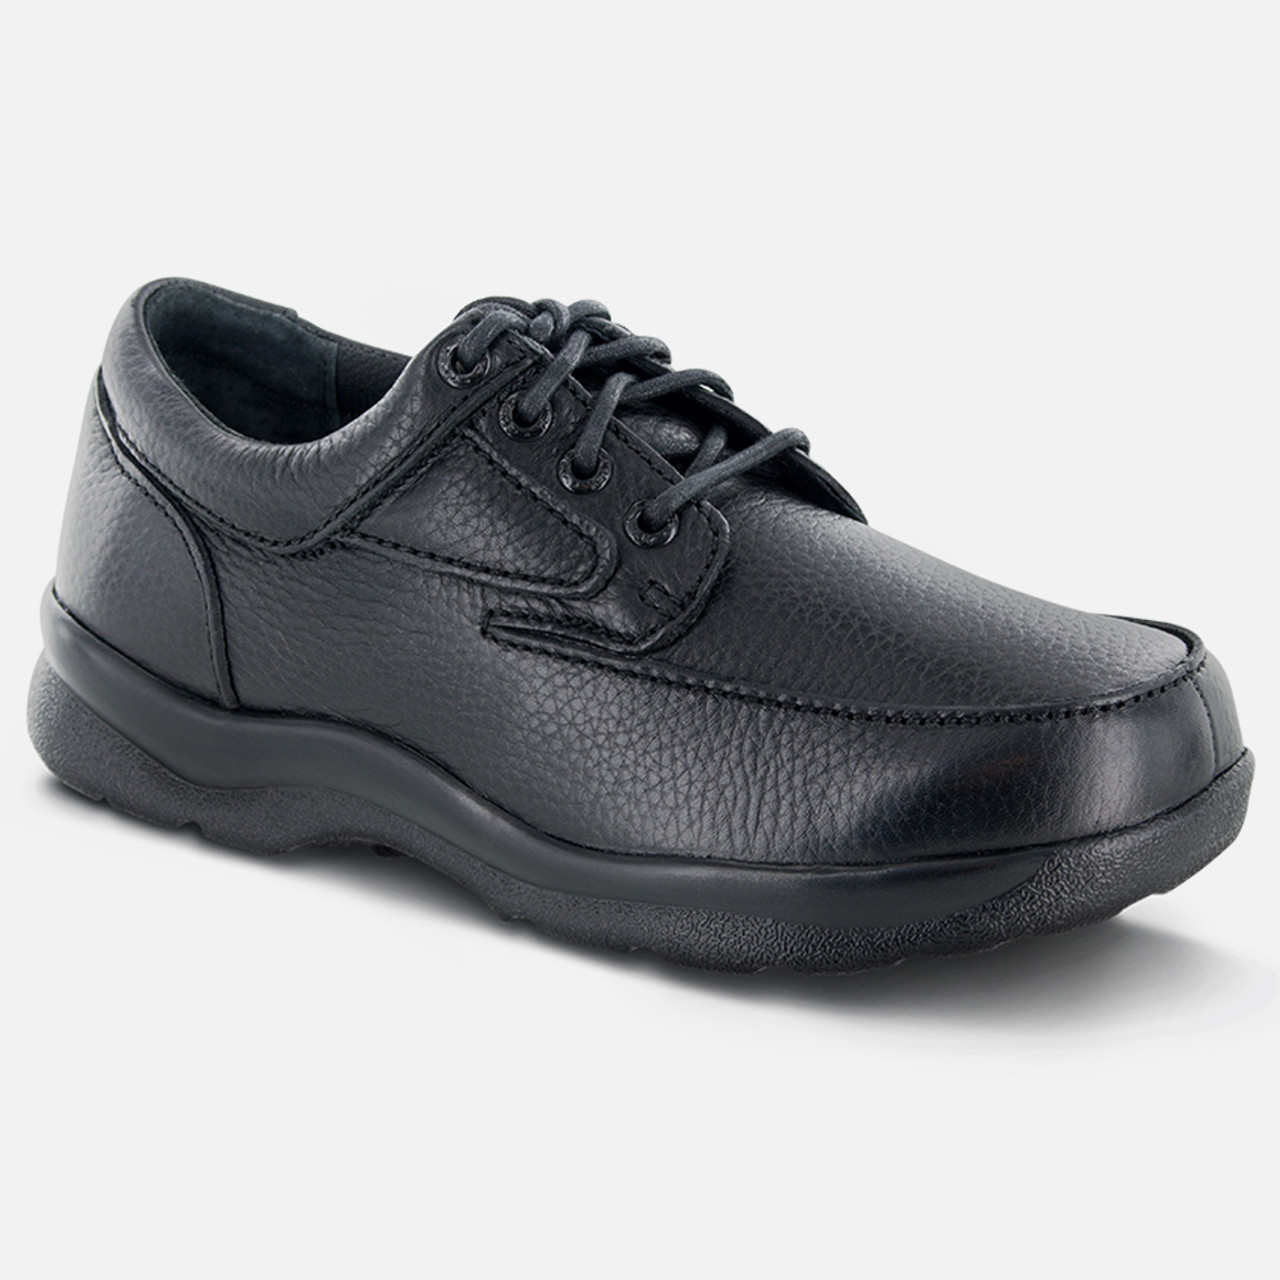 APEX Men's Ariya Moc Toe Dress Shoe - Black